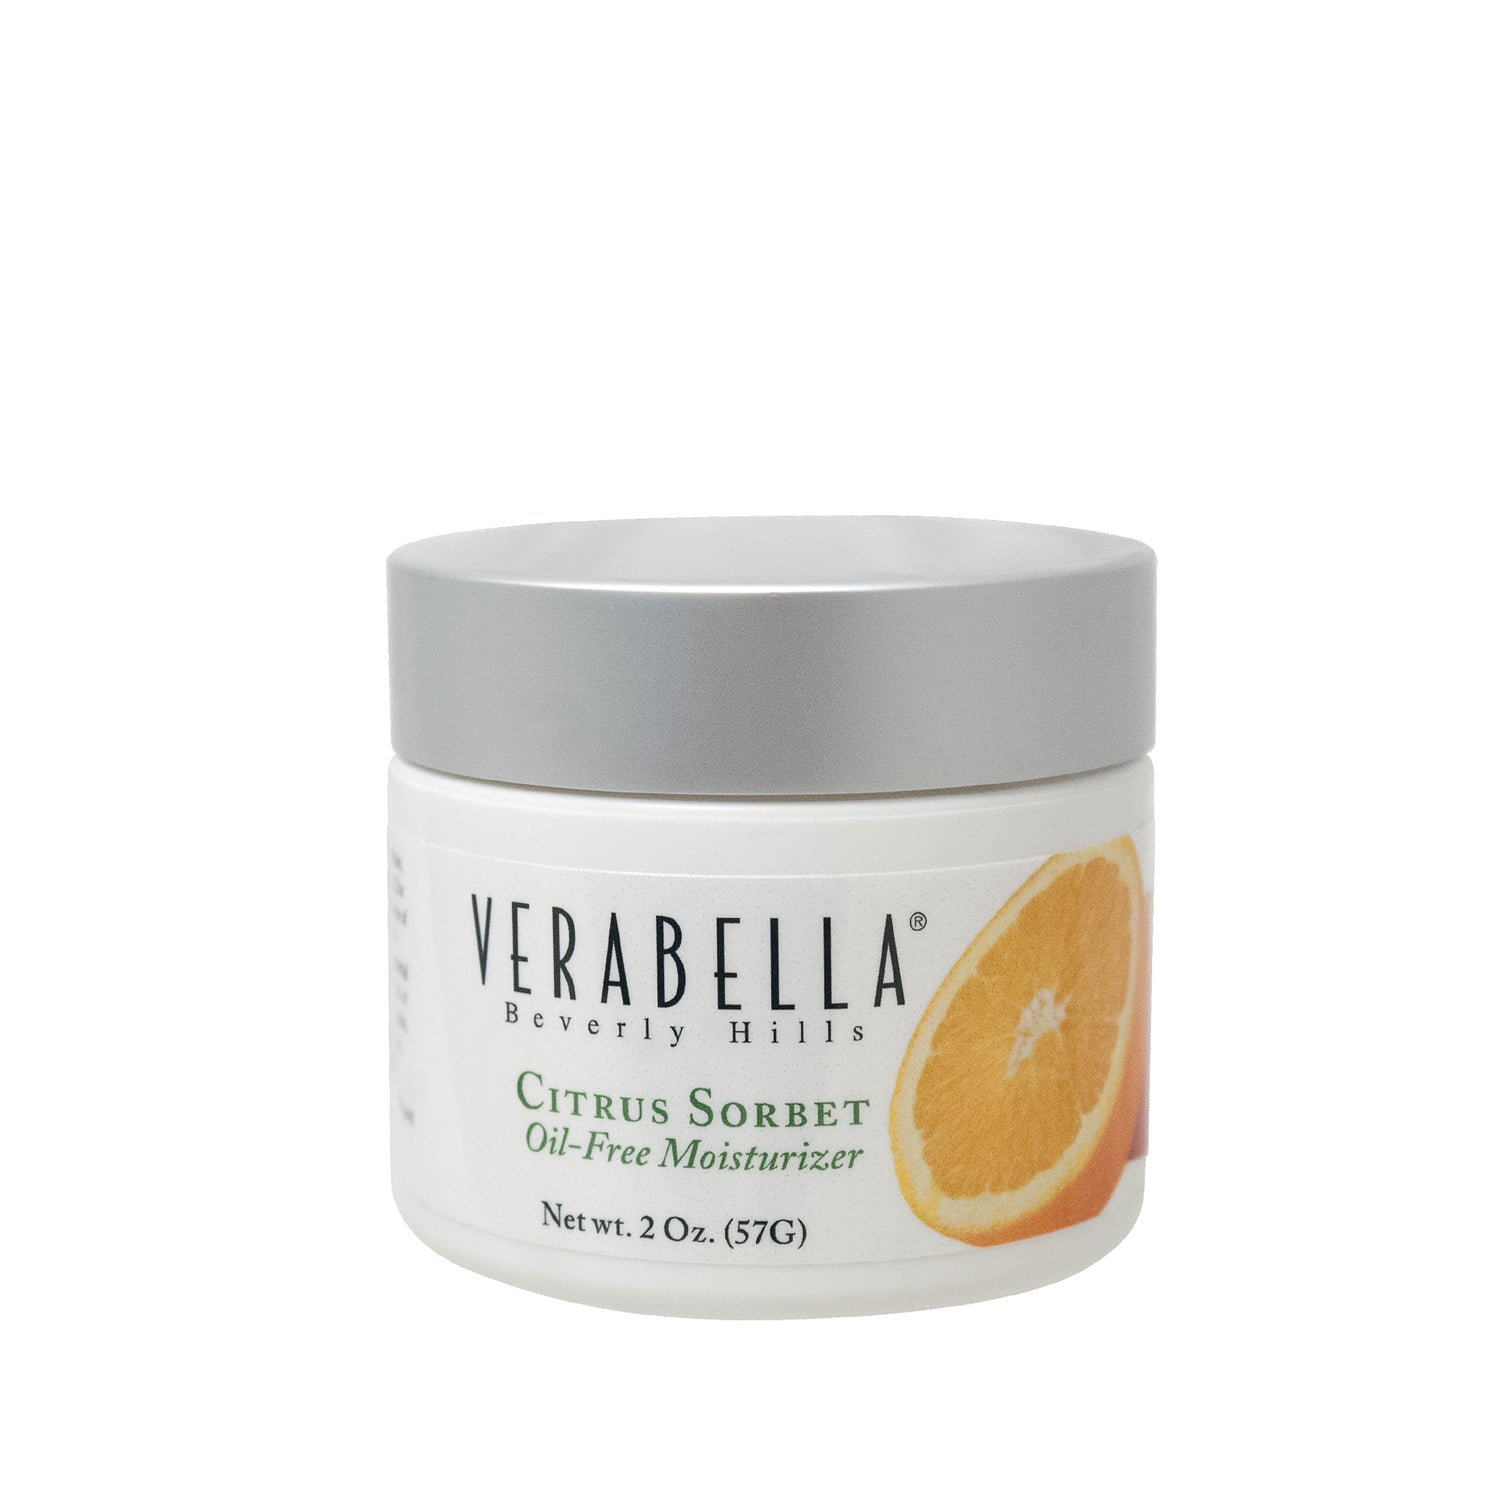 Verabella Citrus Sorbet Oil-Free Moisturizer product image